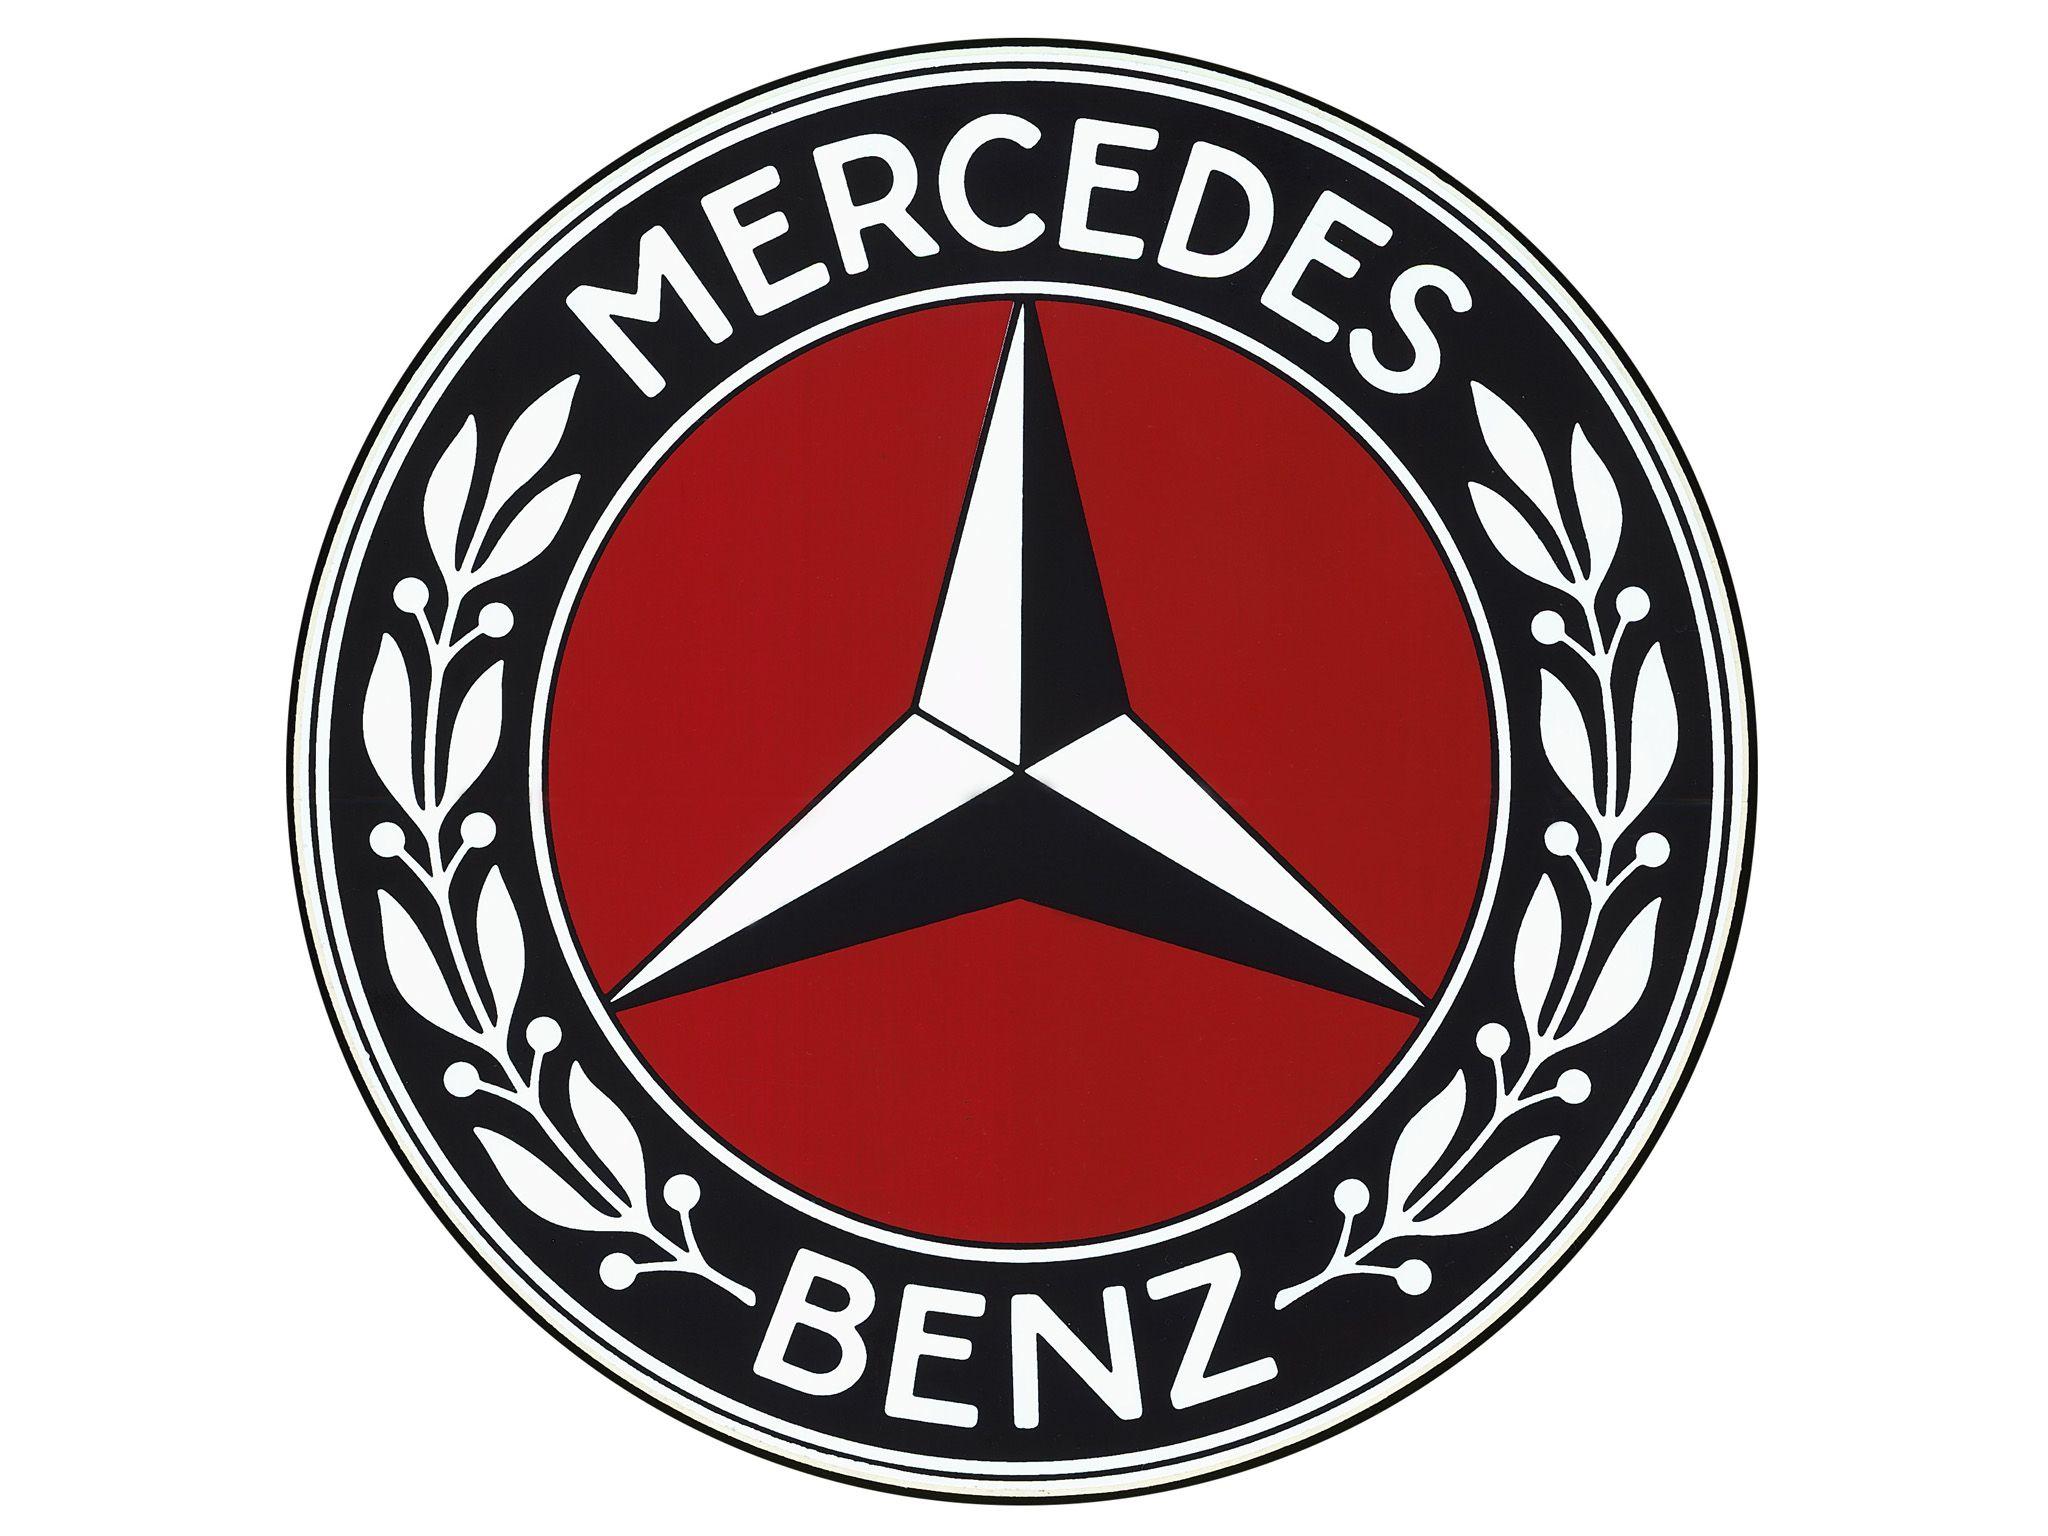 Benz Logo - Behind The Badge: Mercedes Benz's Star Emblem Holds A Big Secret